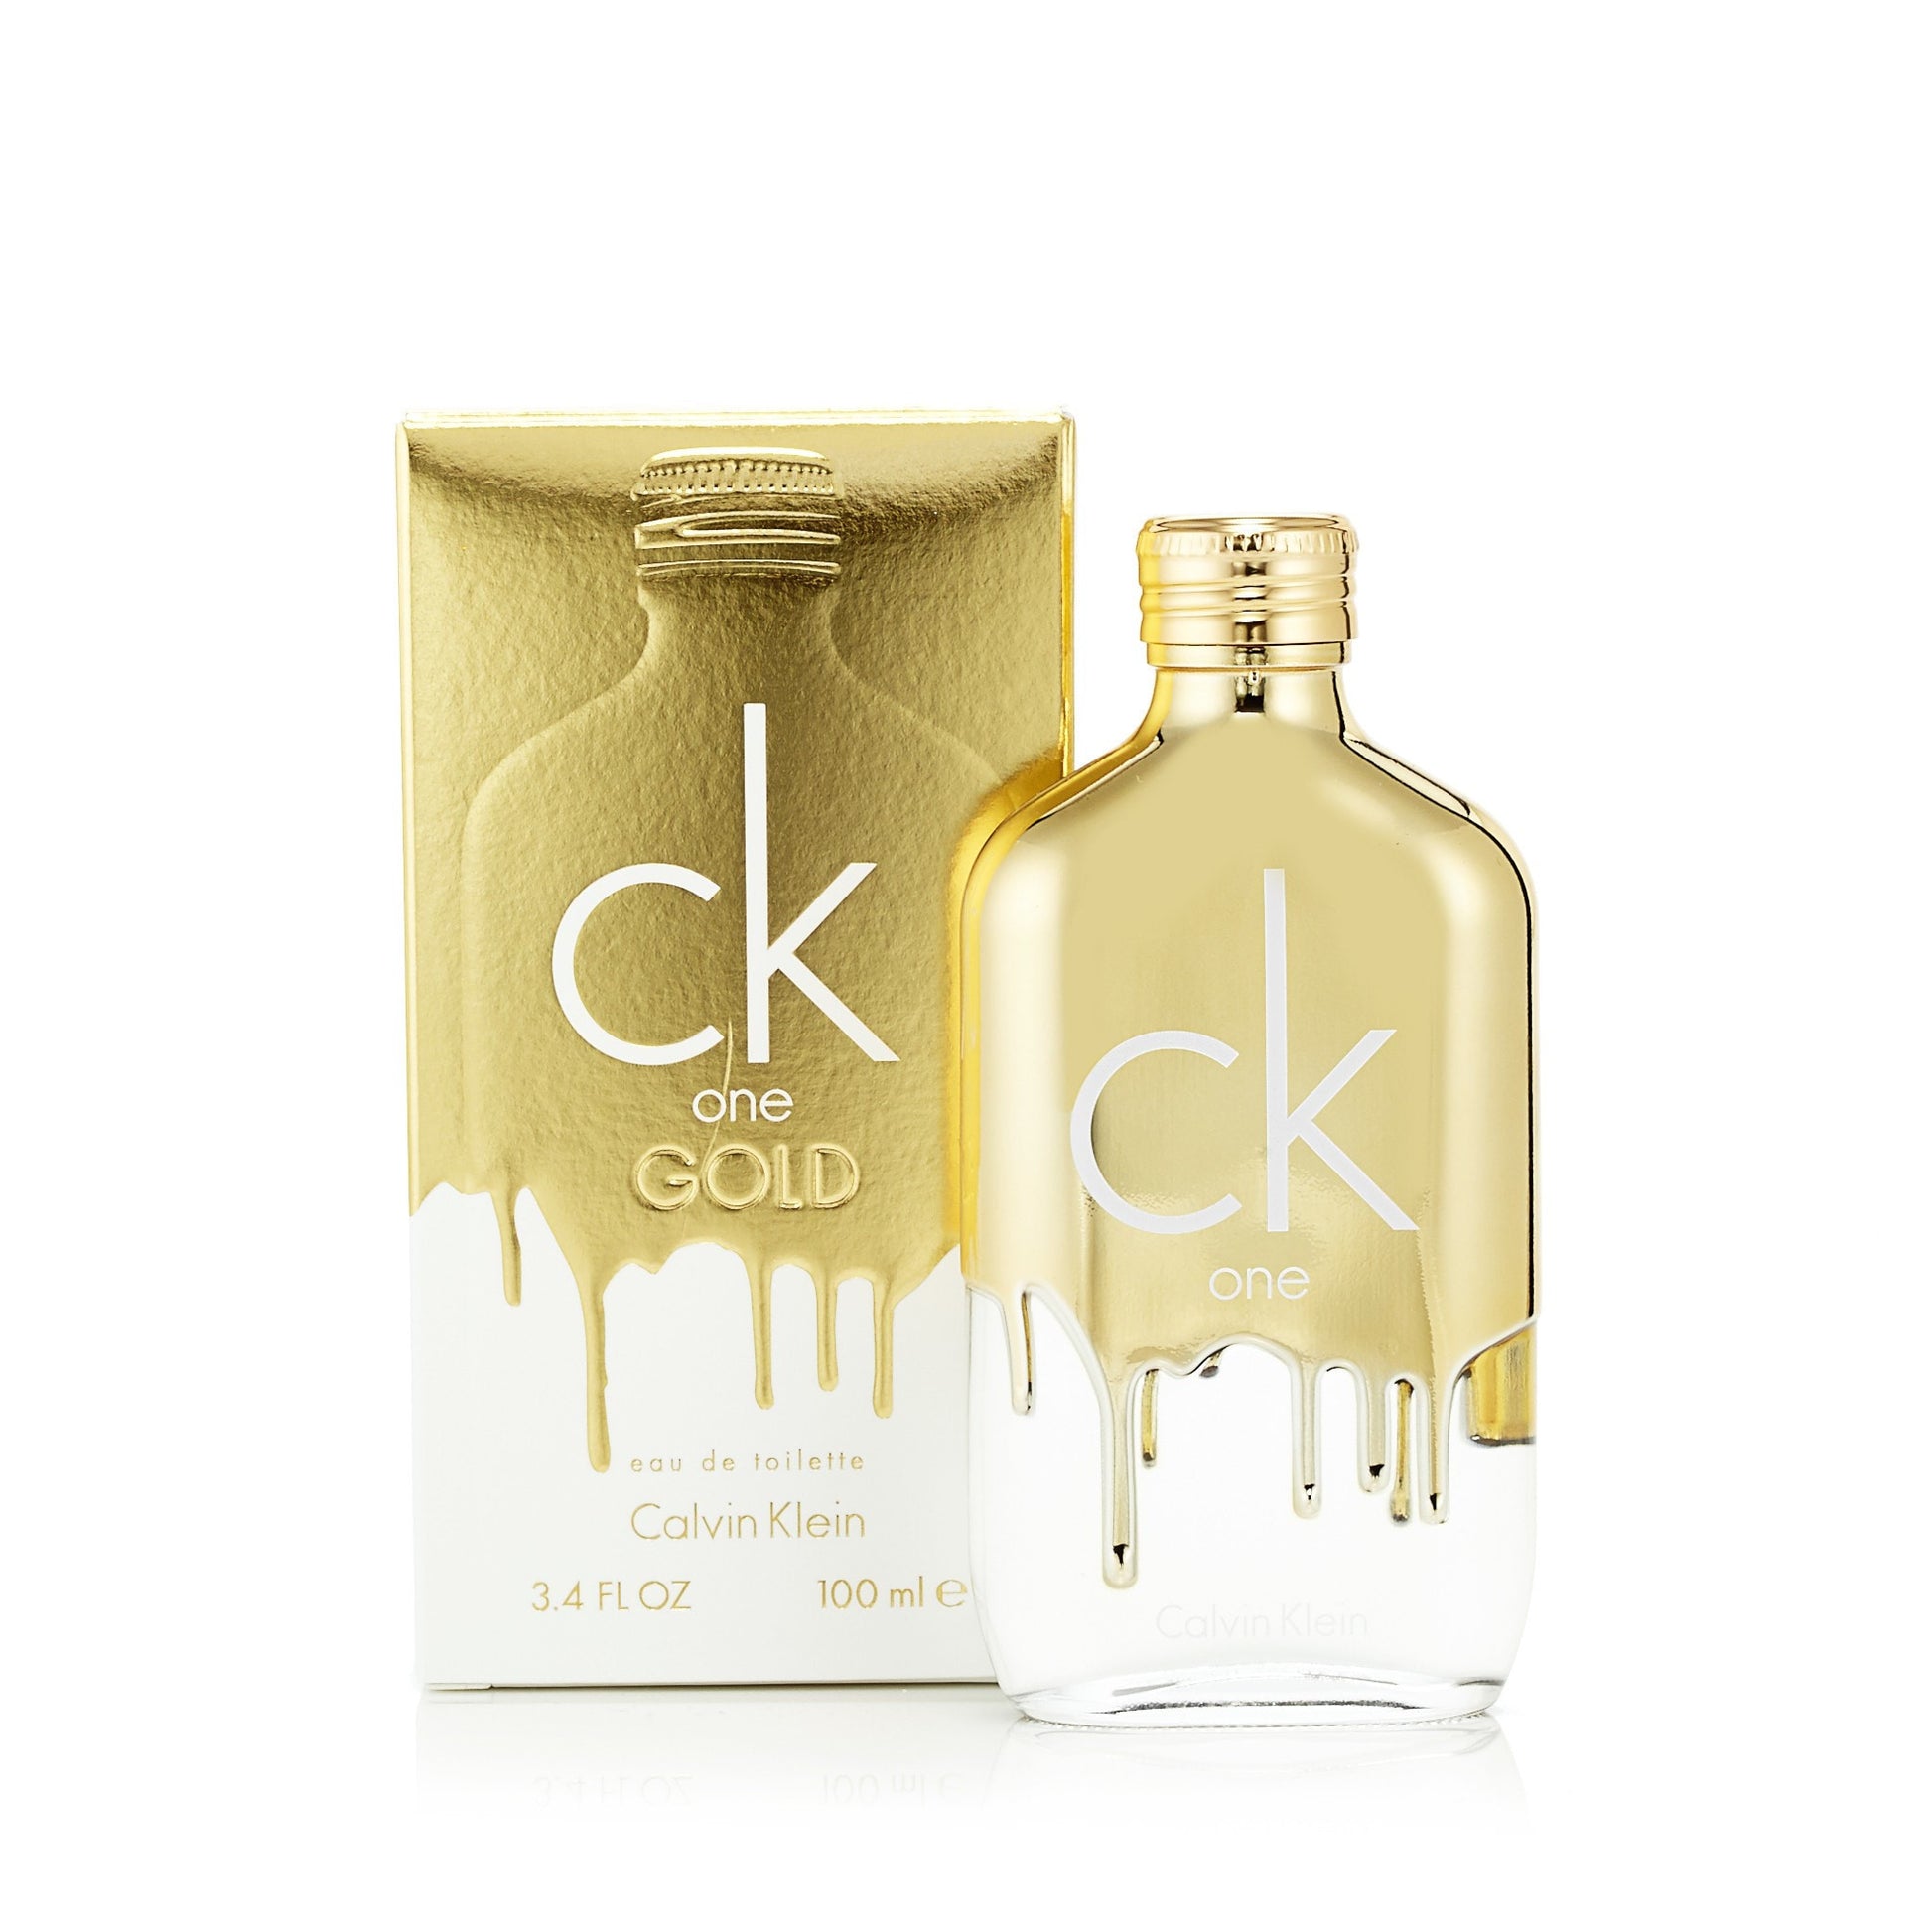 CK One Gold Eau de Toilette Spray for Women and Men by Calvin Klein 3.4 oz. Click to open in modal